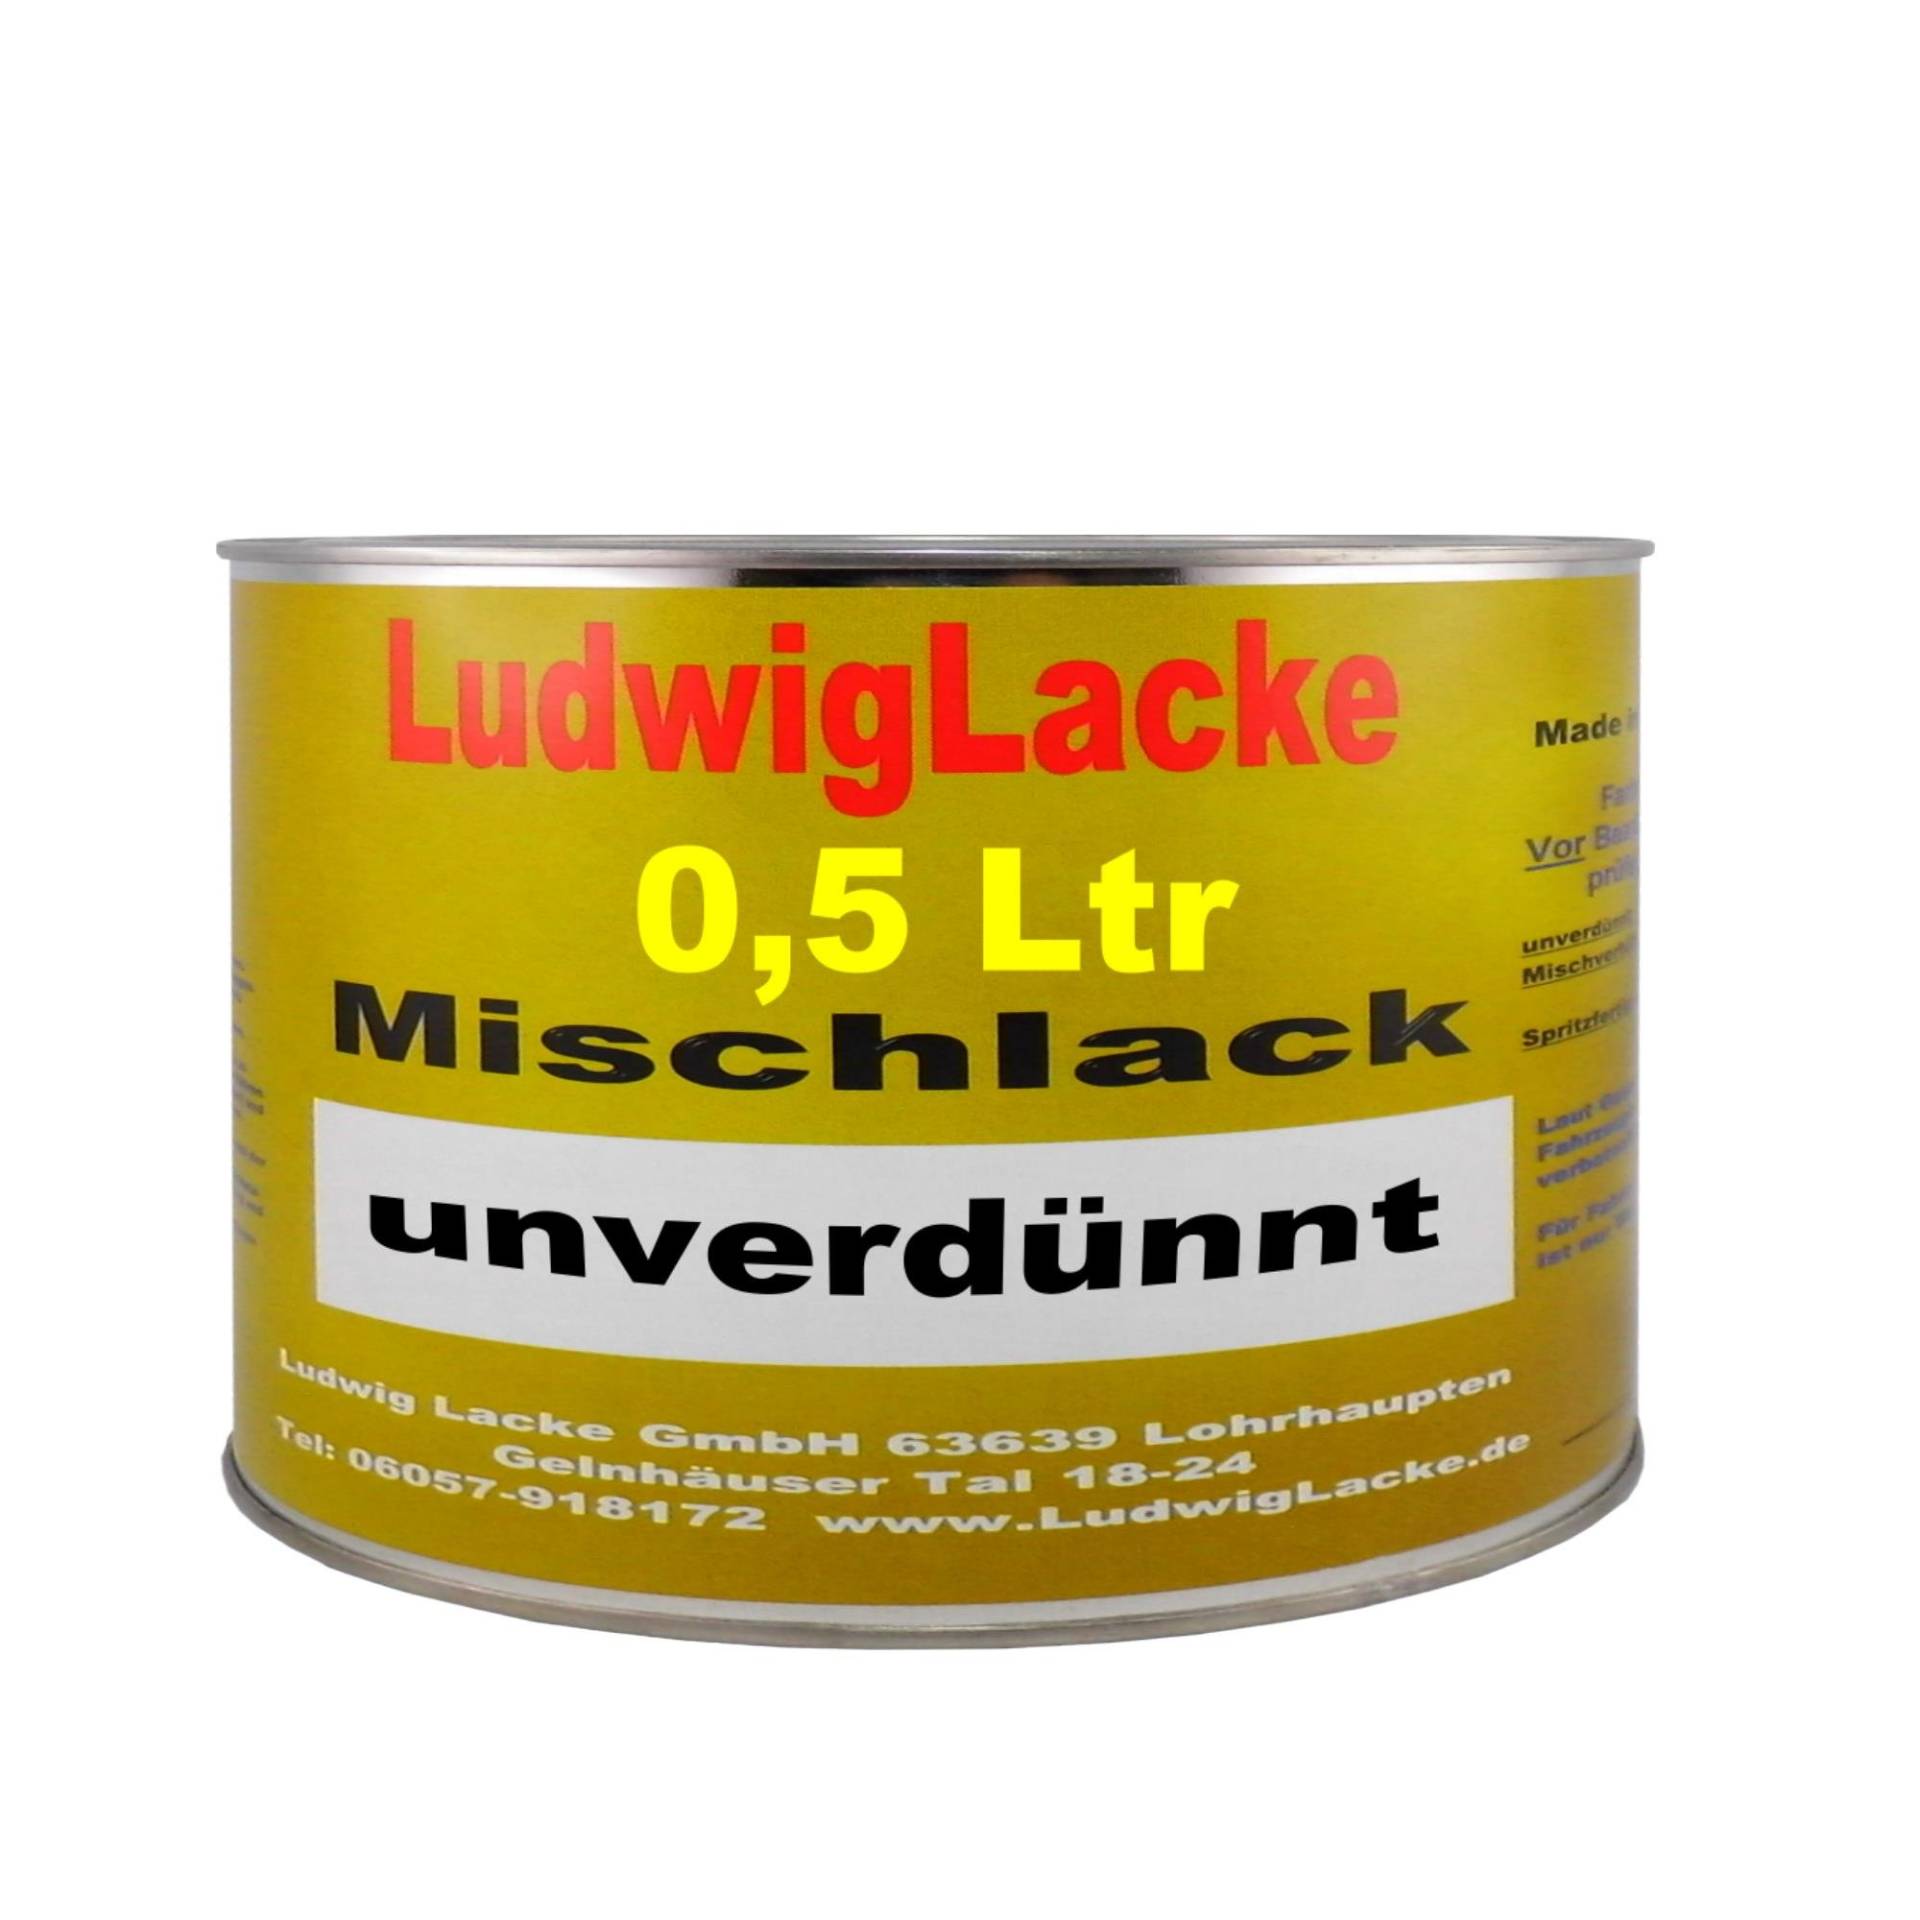 Ludwig Lacke 500 ml unverdünnter Autolack für VW Indienblau 91 LL5M Bj.90-12 von Ludwiglacke